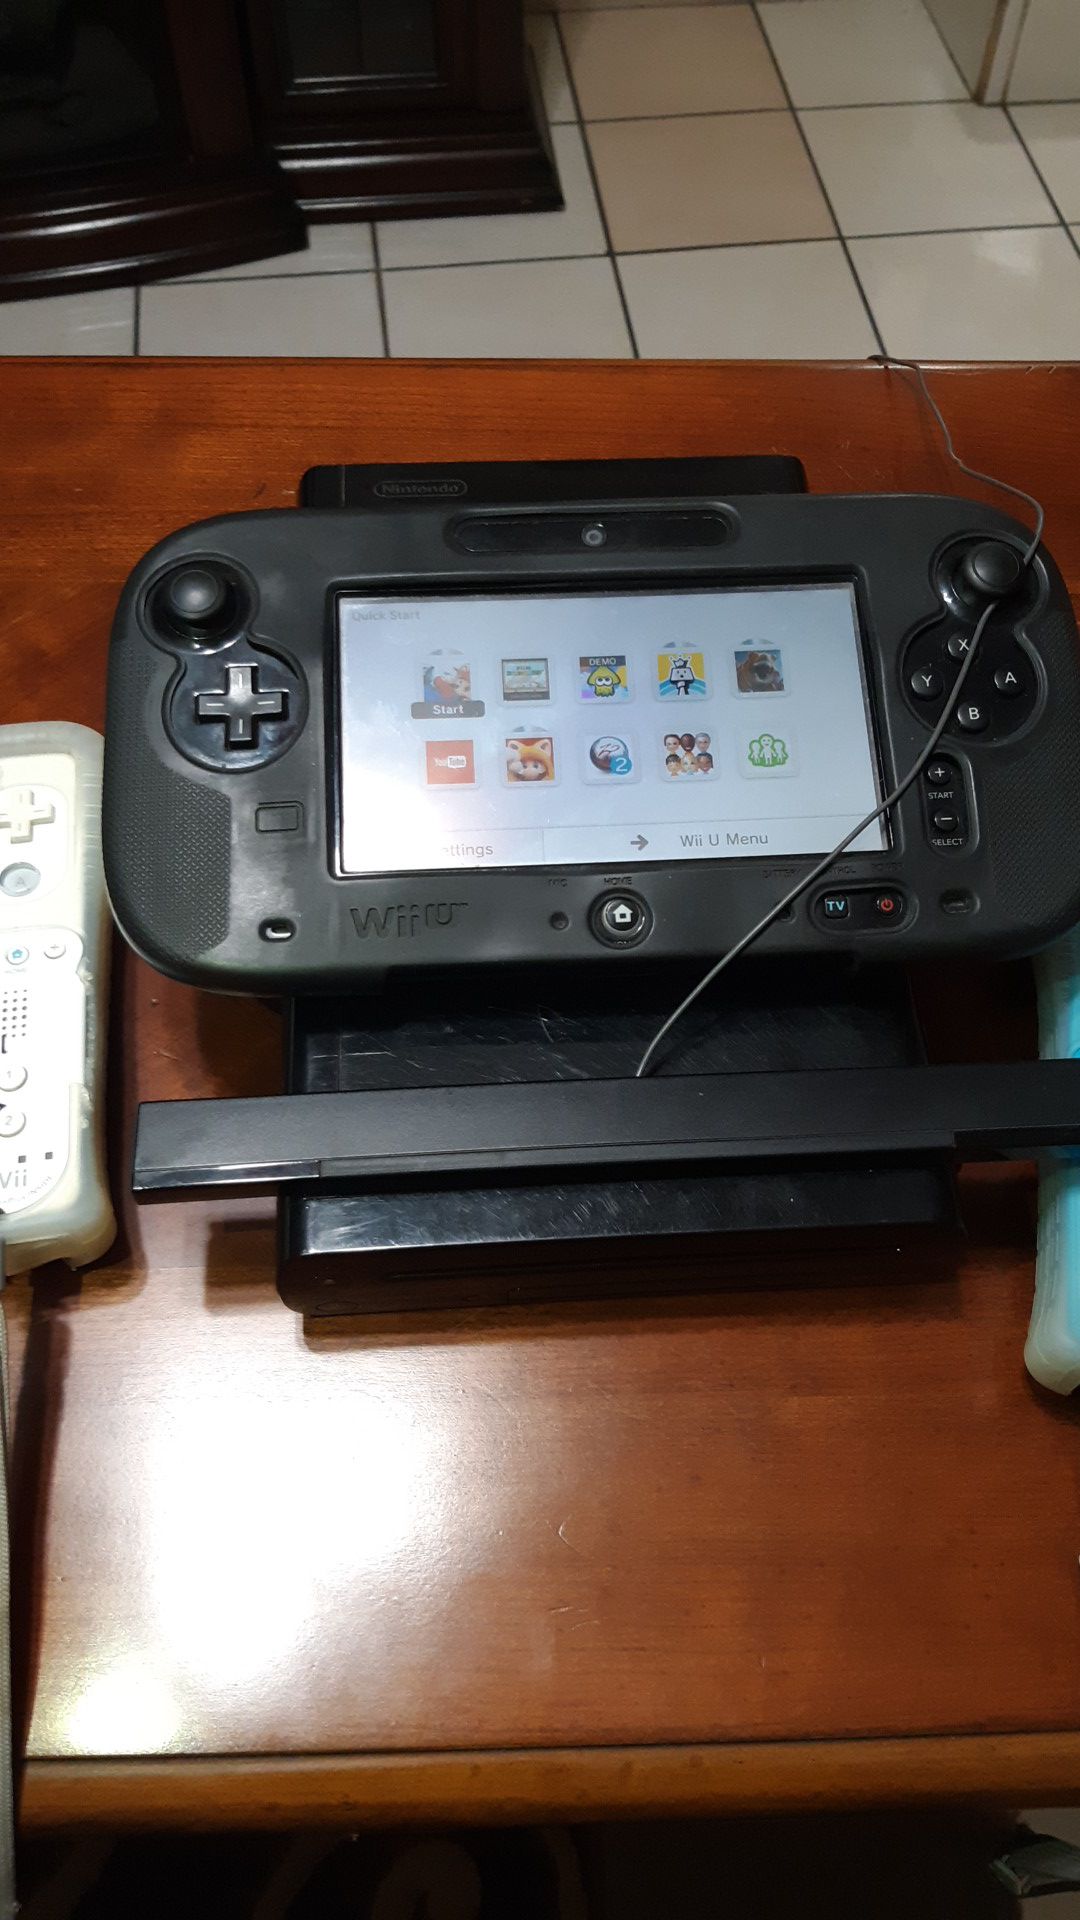 Nintendo Wii U, Black, 32gb, console, accessories, and games.